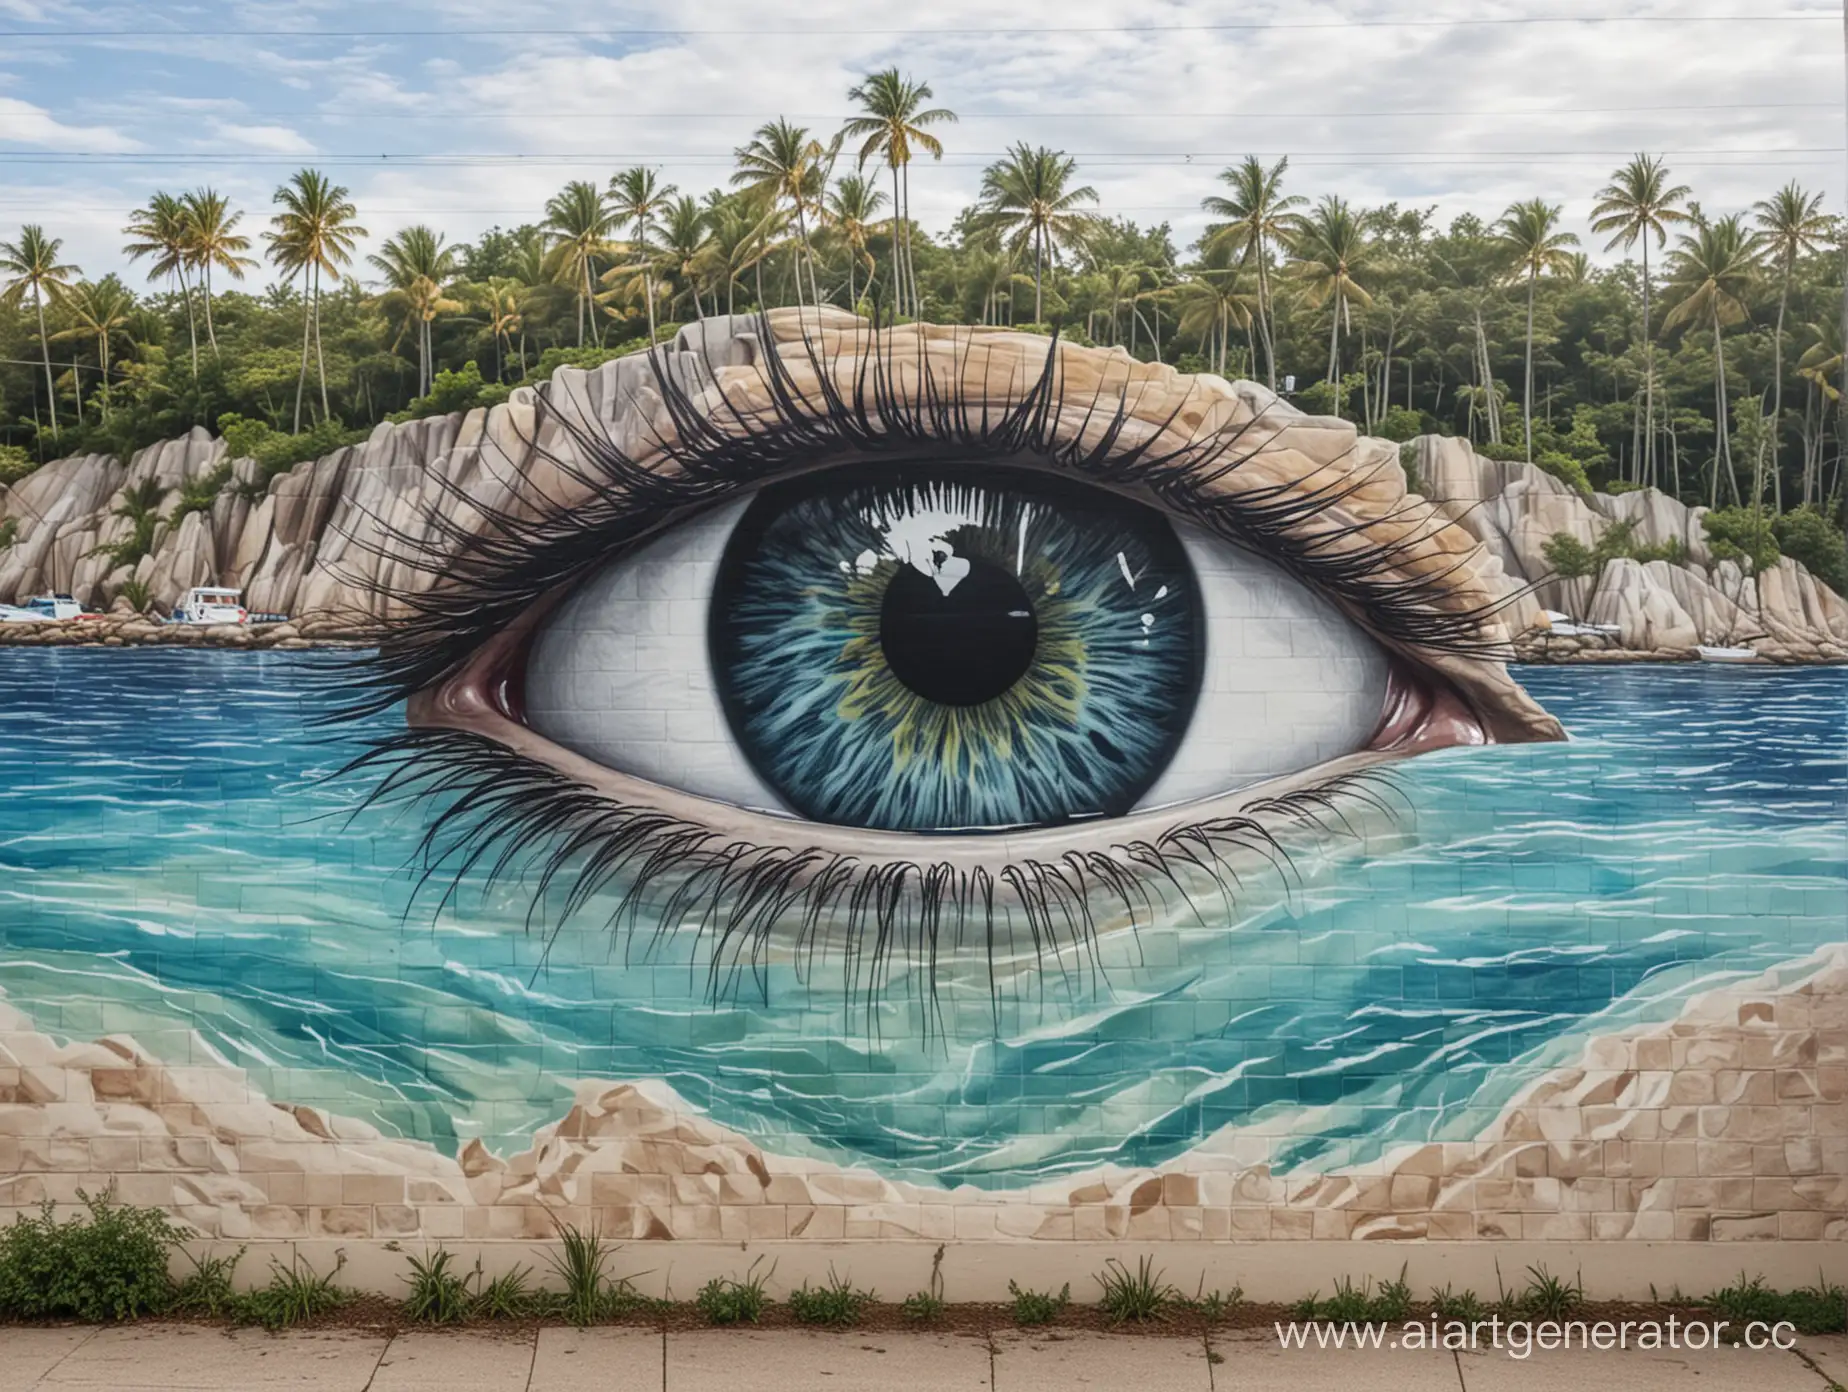 Mural-Art-Island-Reflected-in-the-Eye